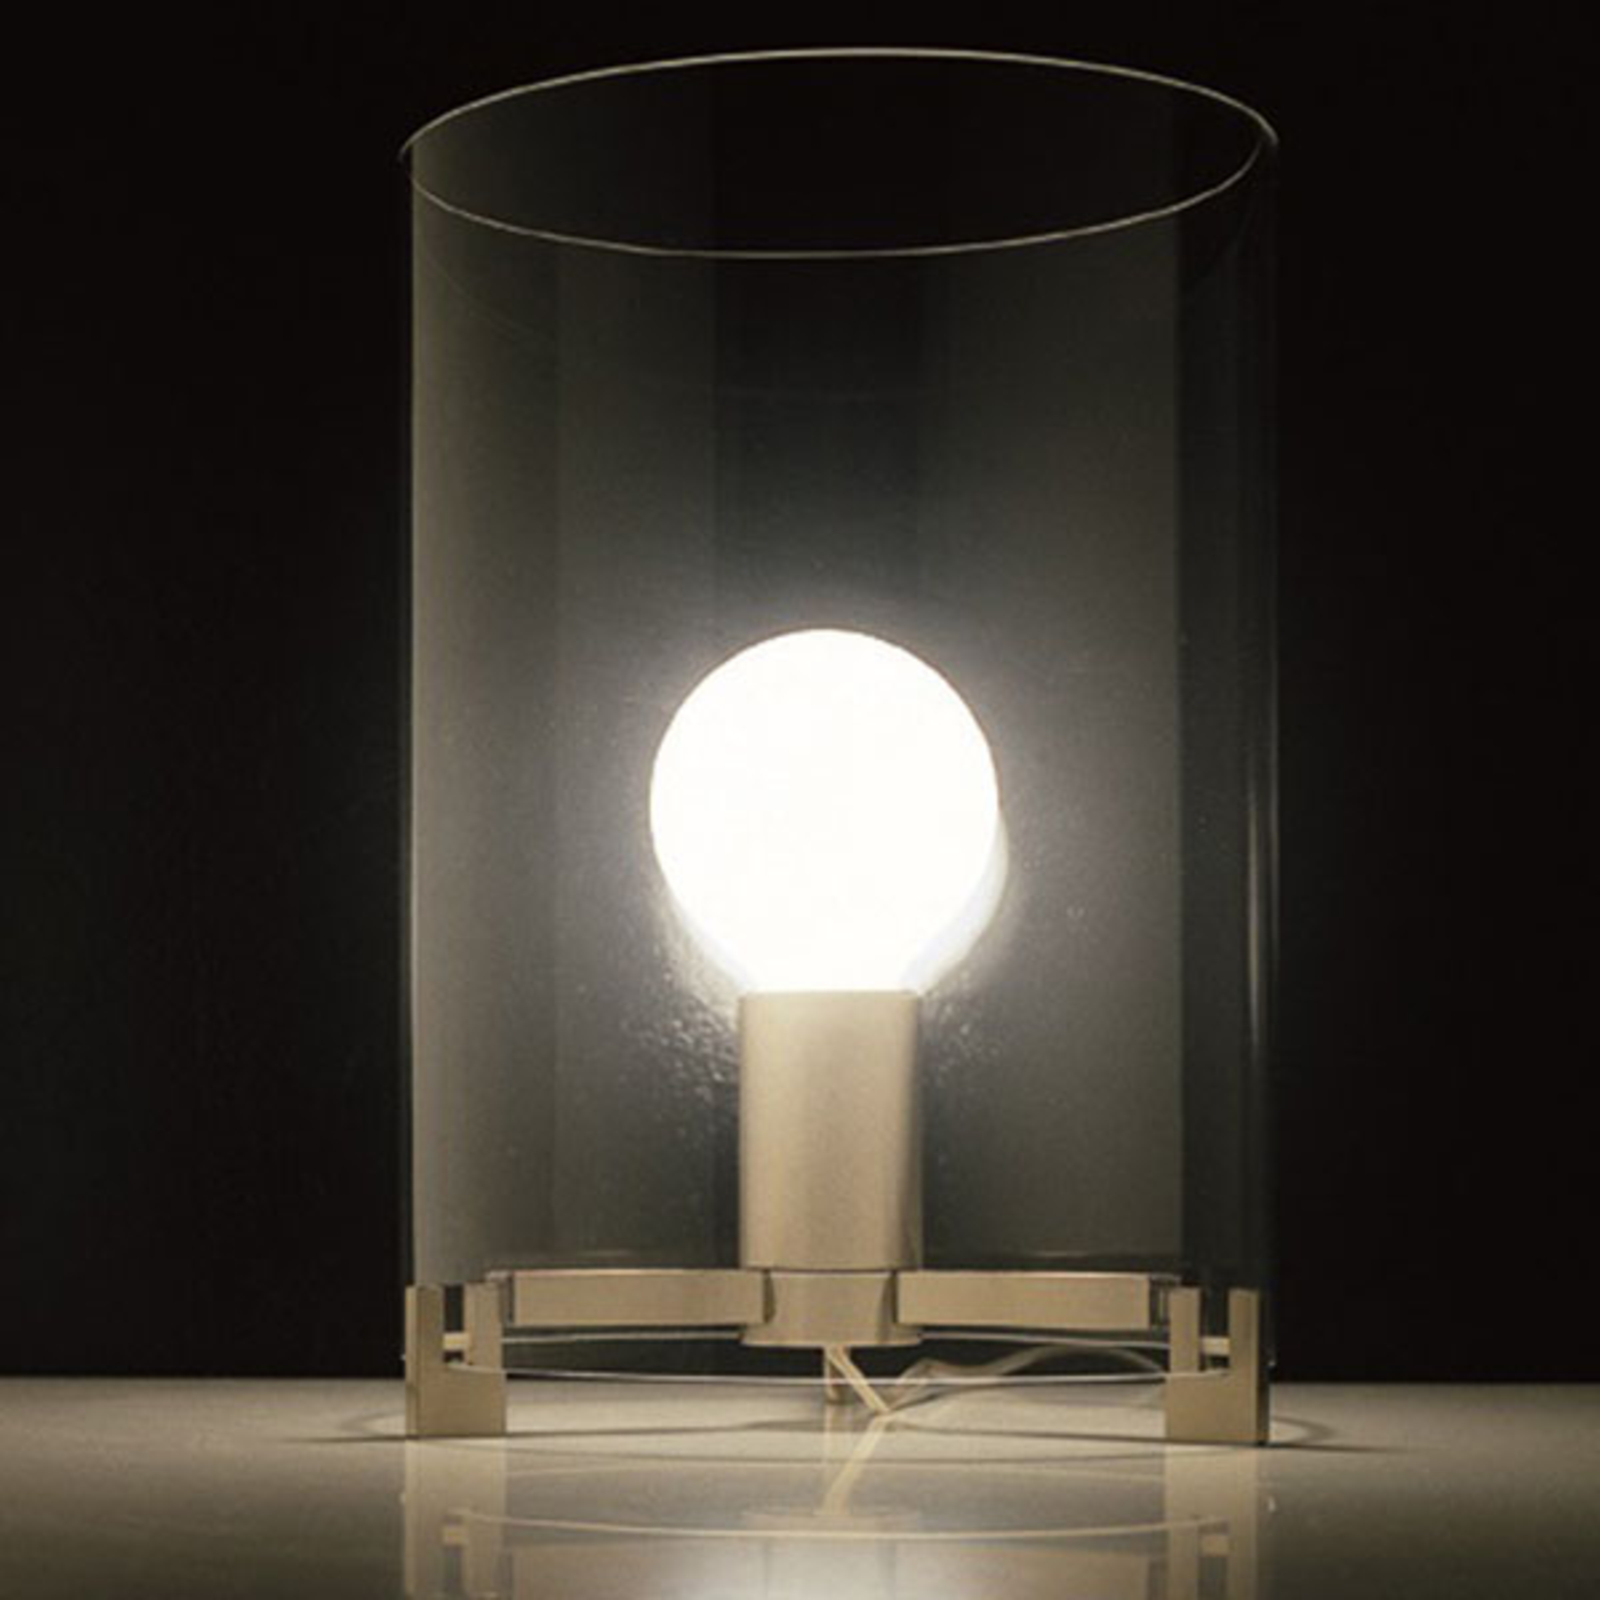 Prandina CPL T1 lampe chromée, verre transparent